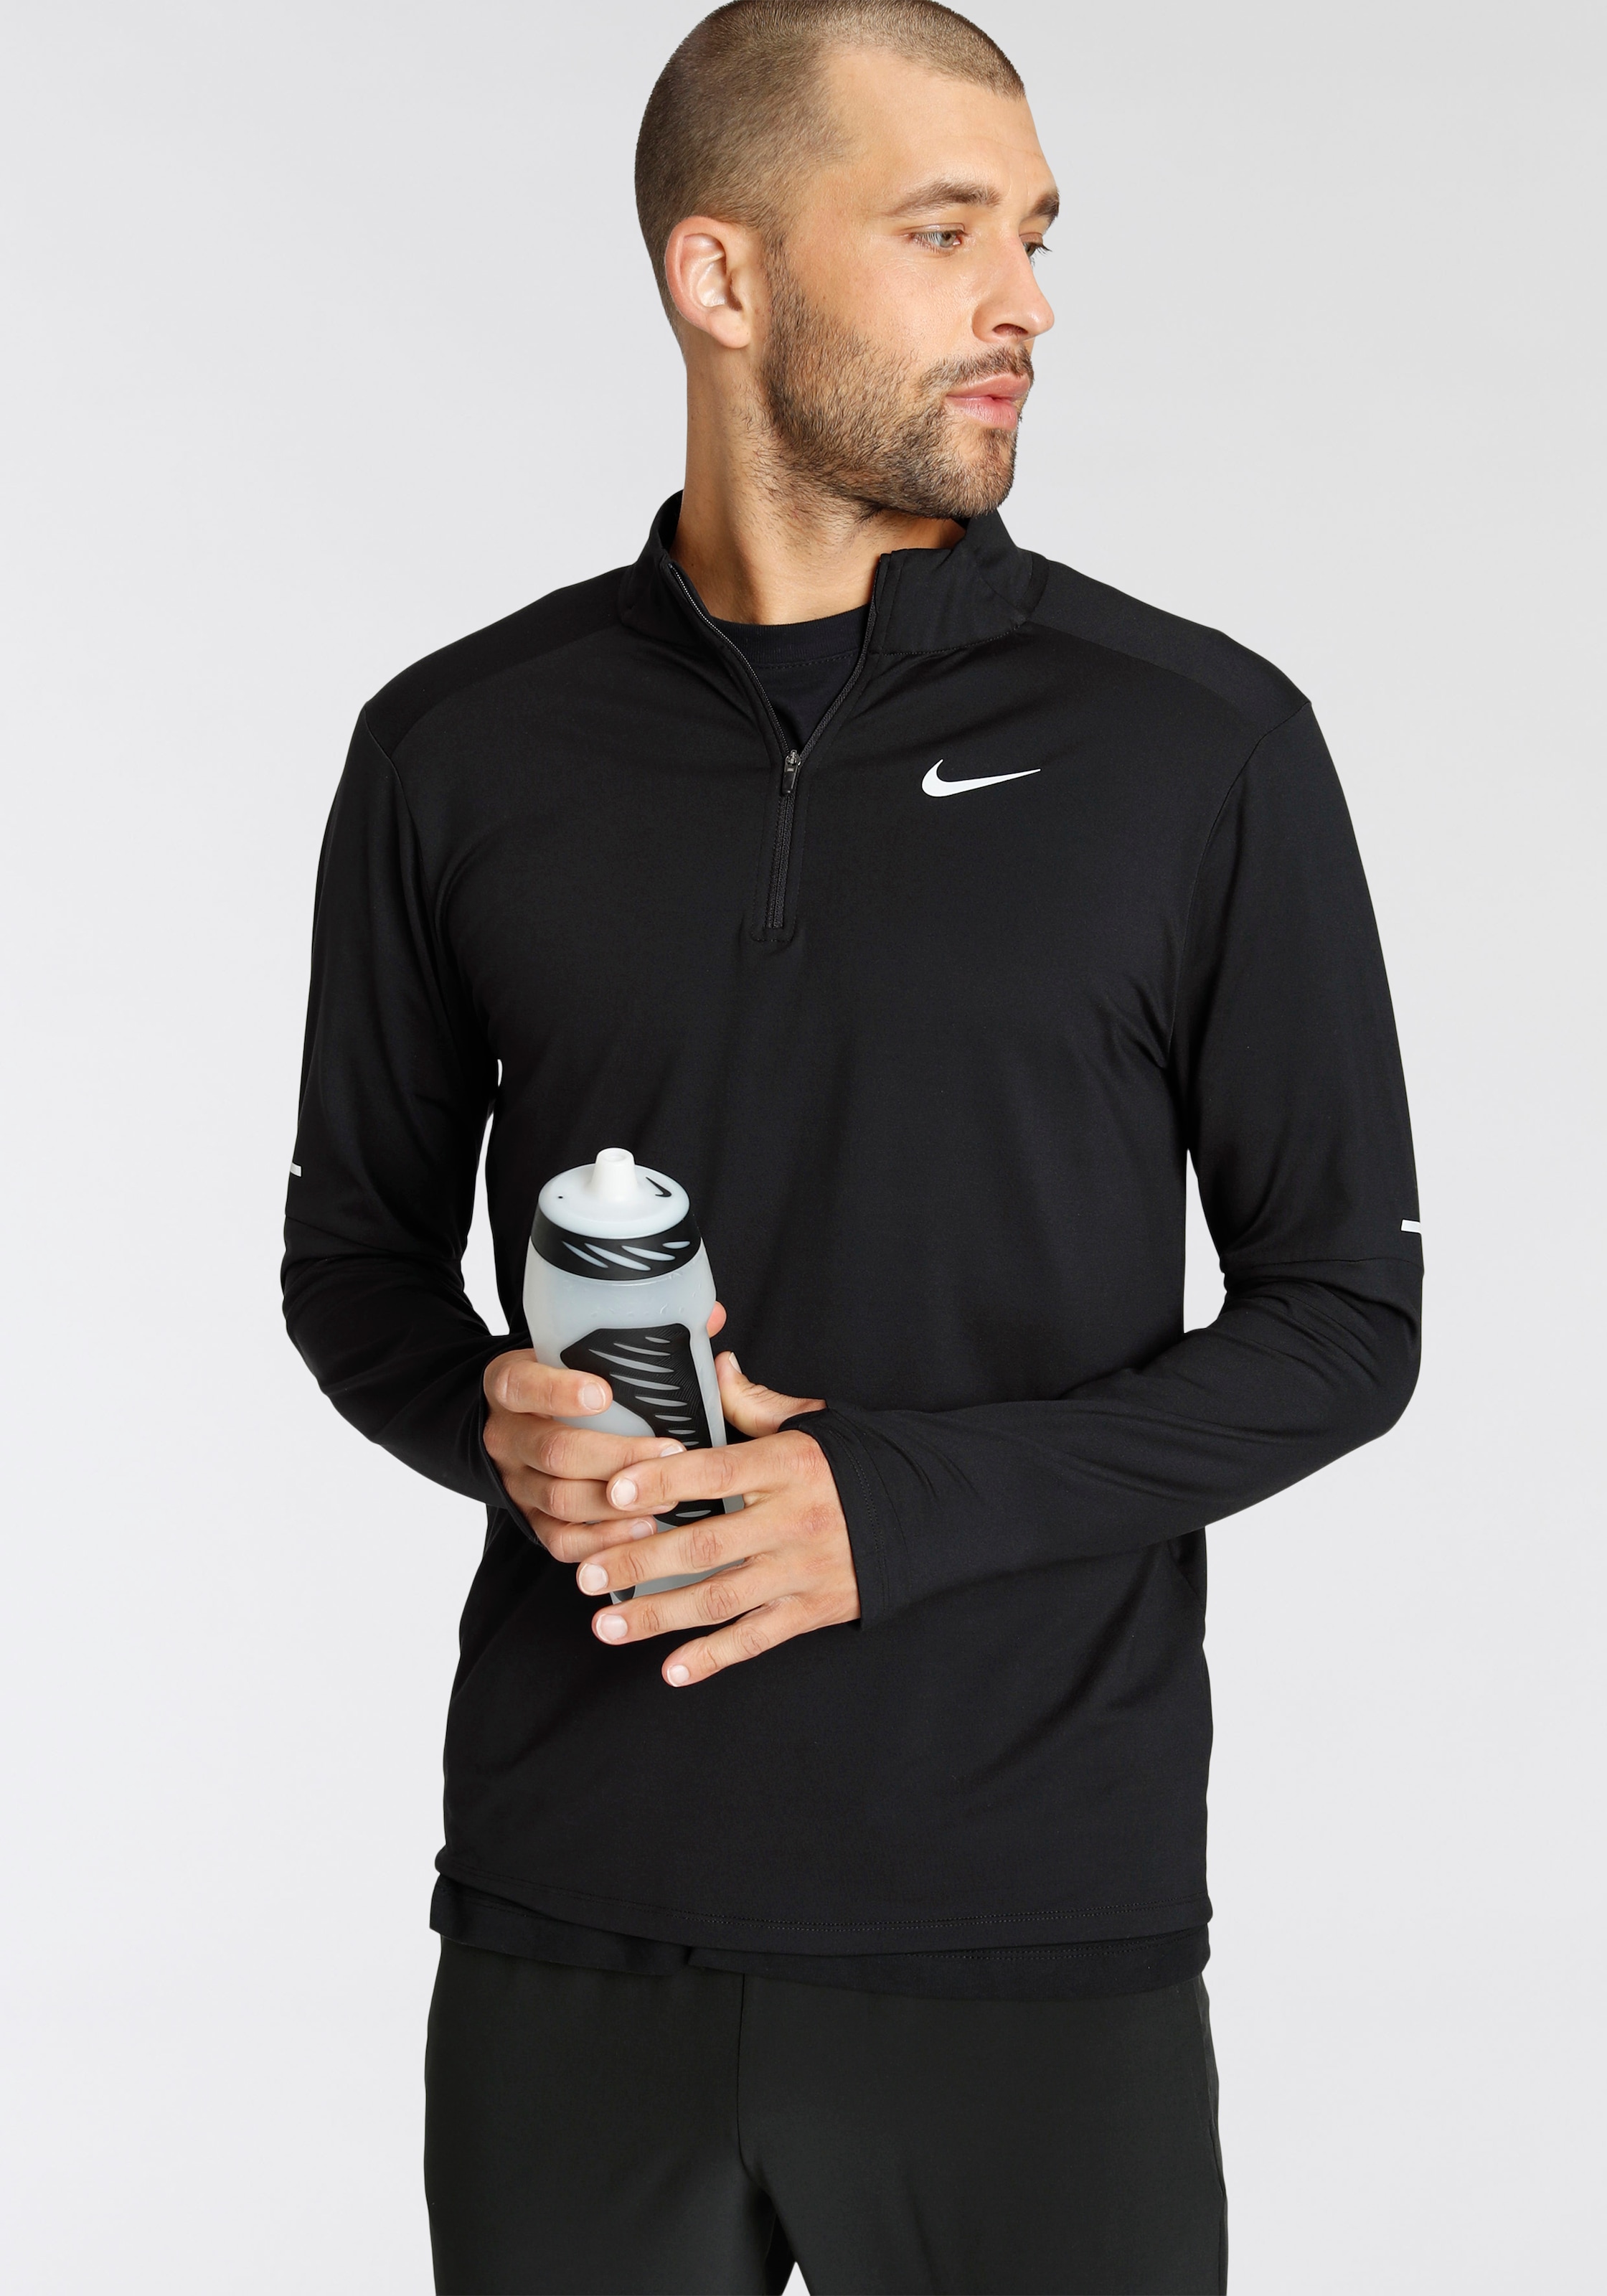 1/-Zip Element bei »Dri-FIT Top« bestellen Laufshirt Nike Running OTTO Men\'s online